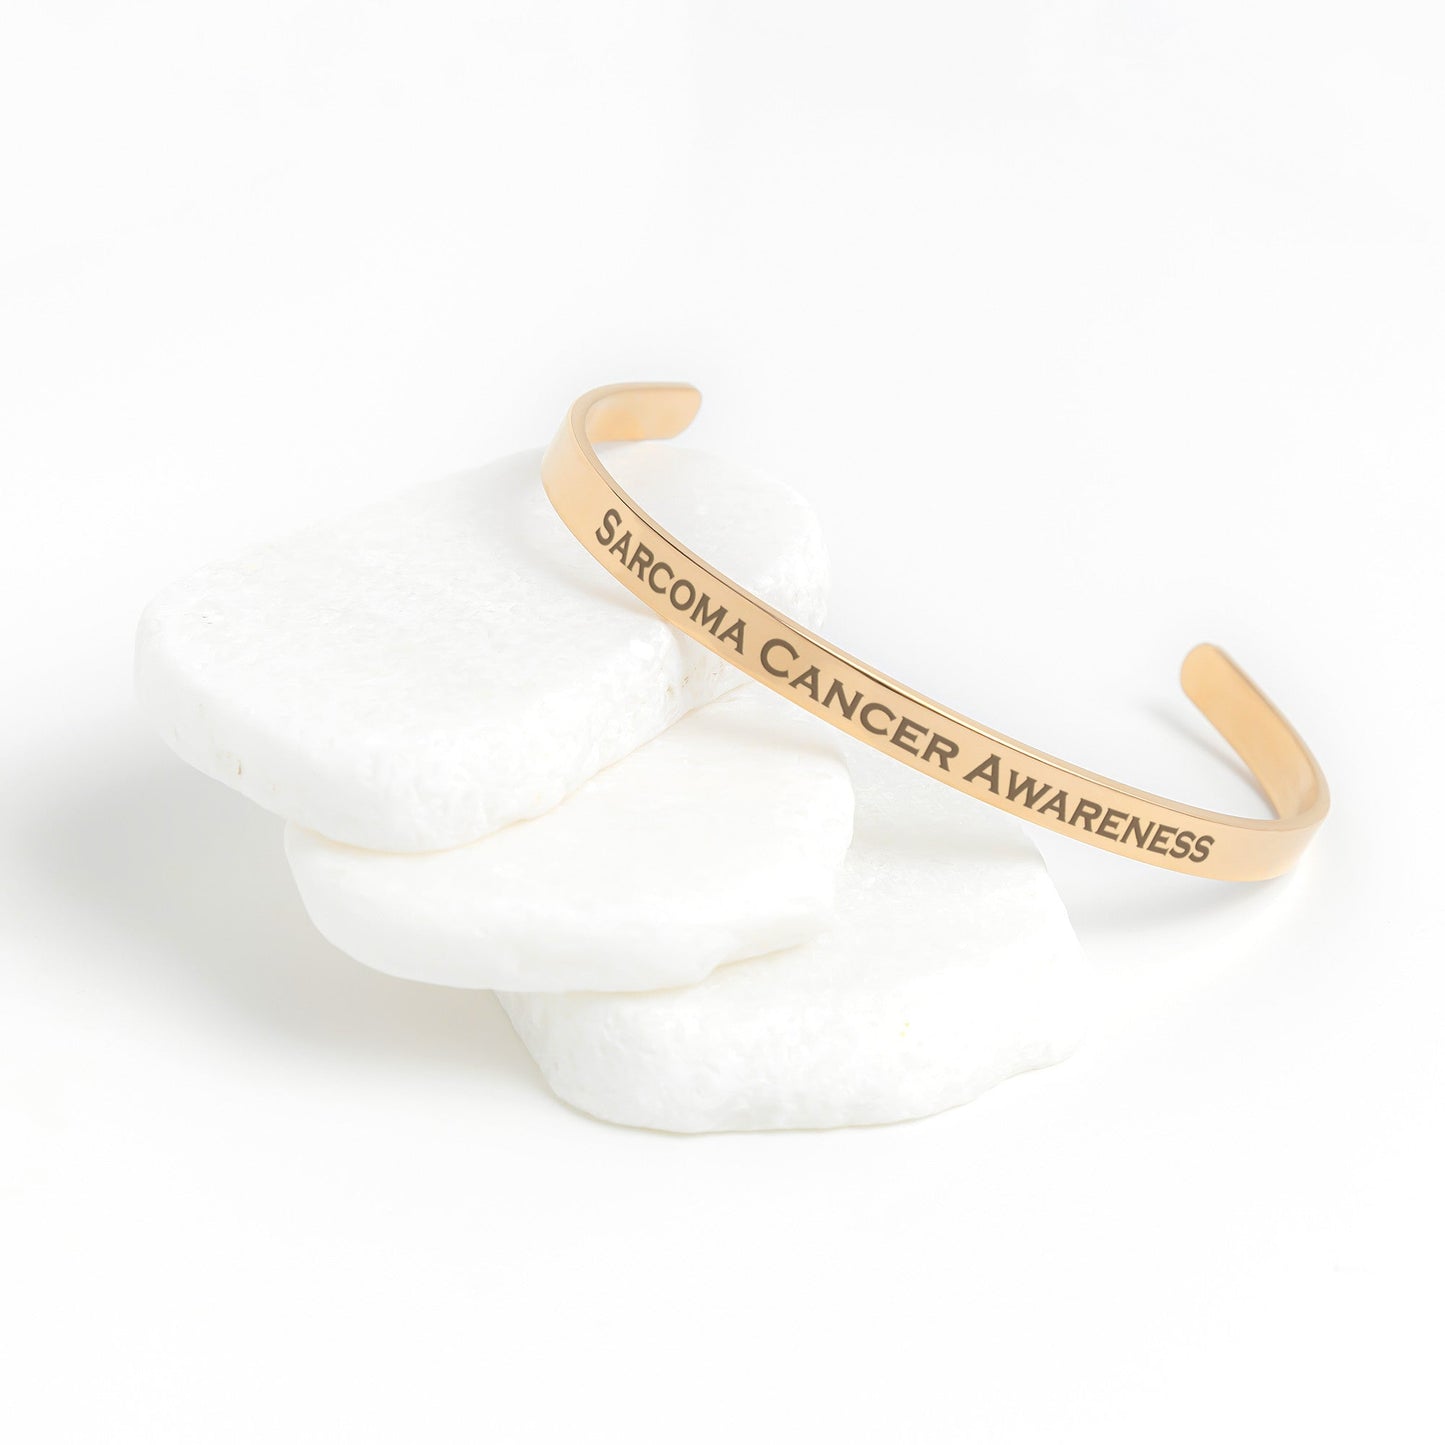 Personalized Sarcoma Cancer Awareness Cuff Bracelet |x|